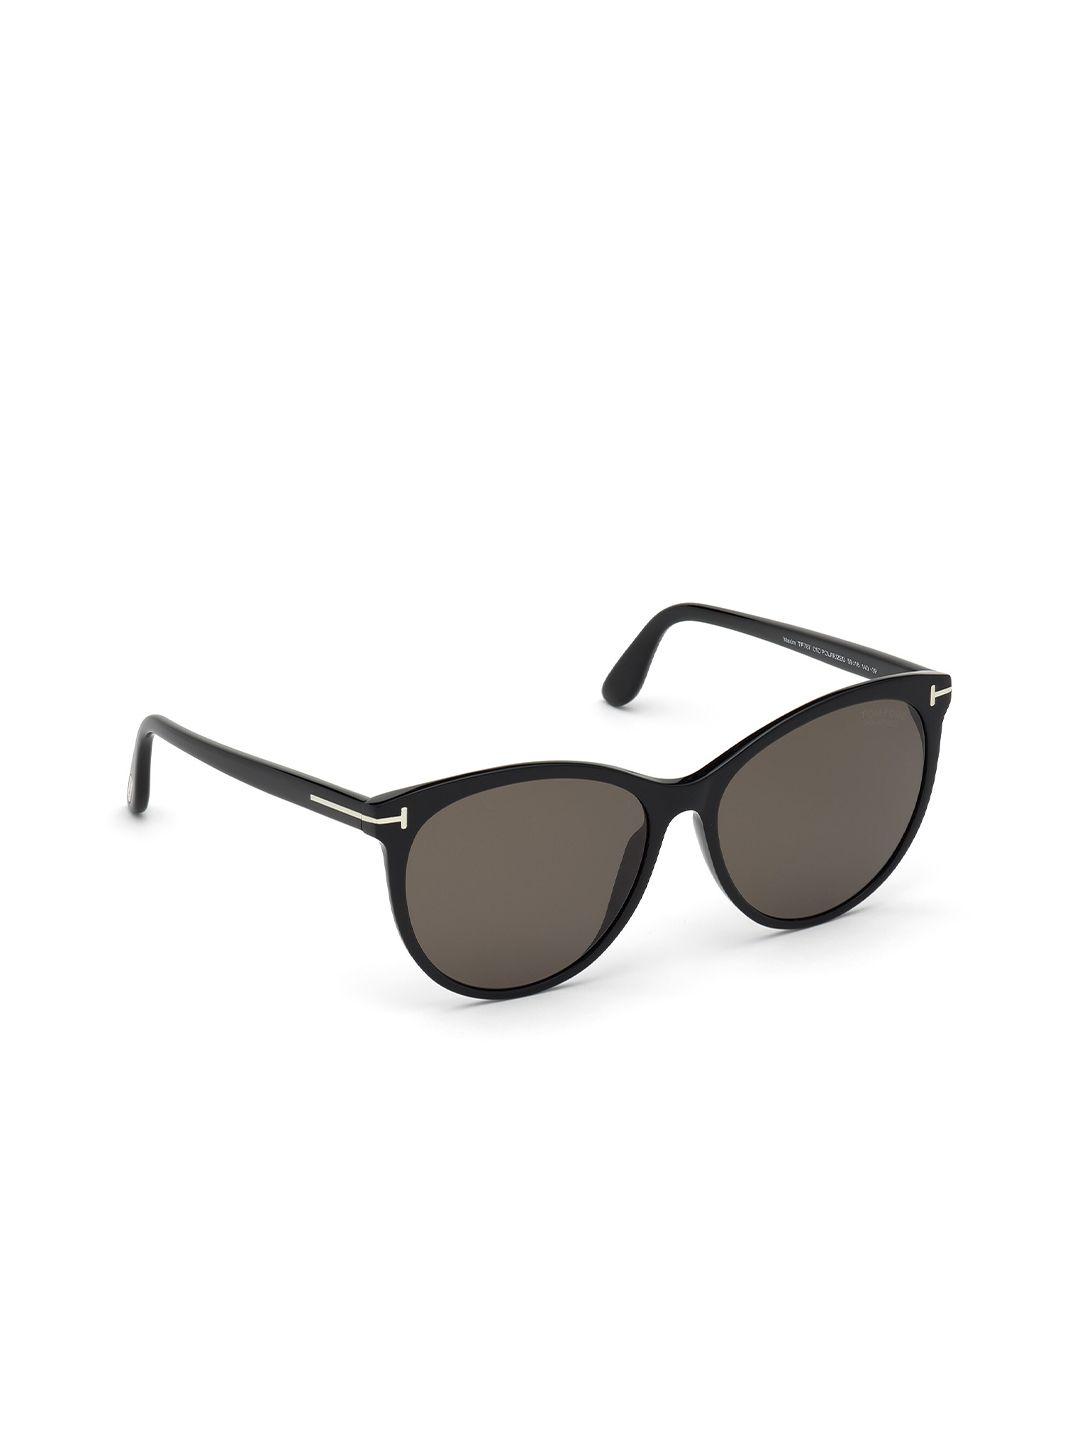 tom ford women grey & black oval sunglasses